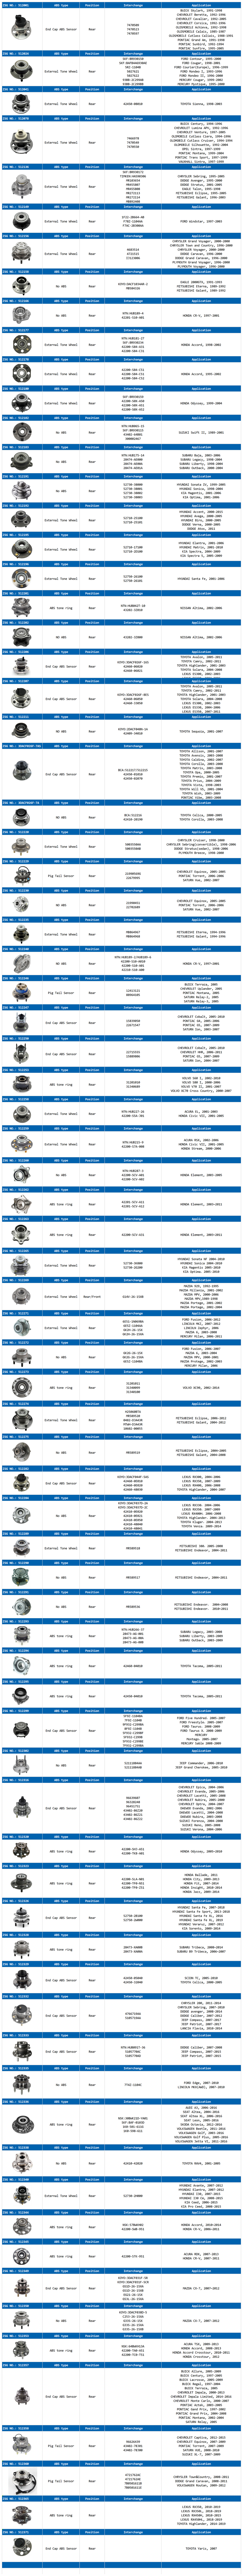 Wheel Bearing Hubs 汽车轮毂单元 20200413.png